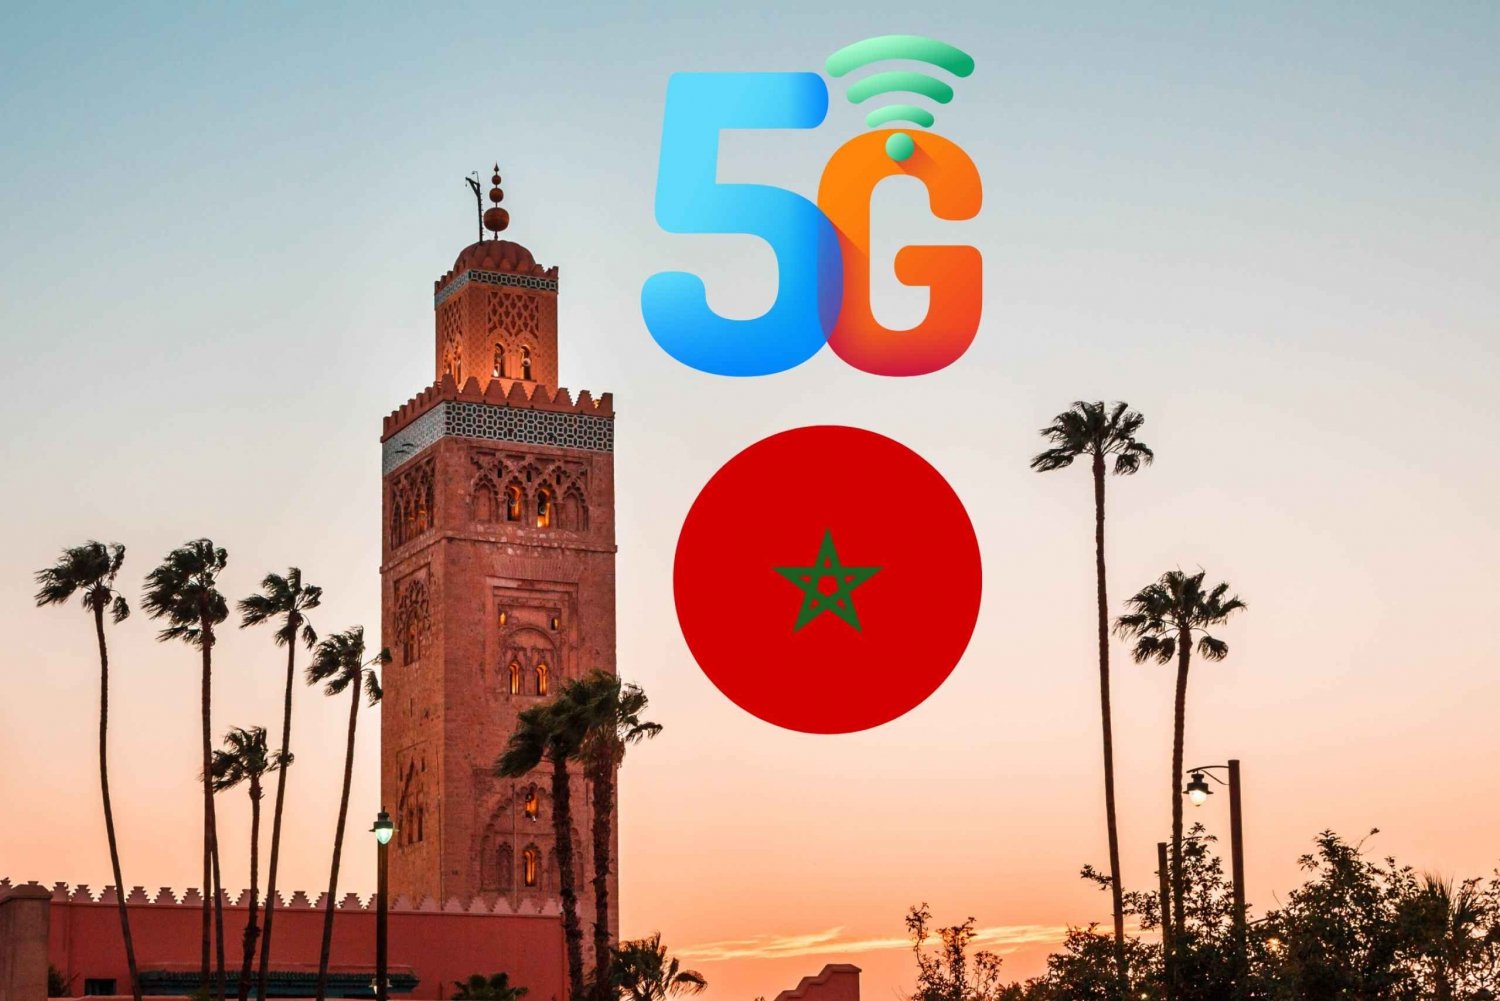 Marokko: Forhåndsbetalt eSIM med mobildata